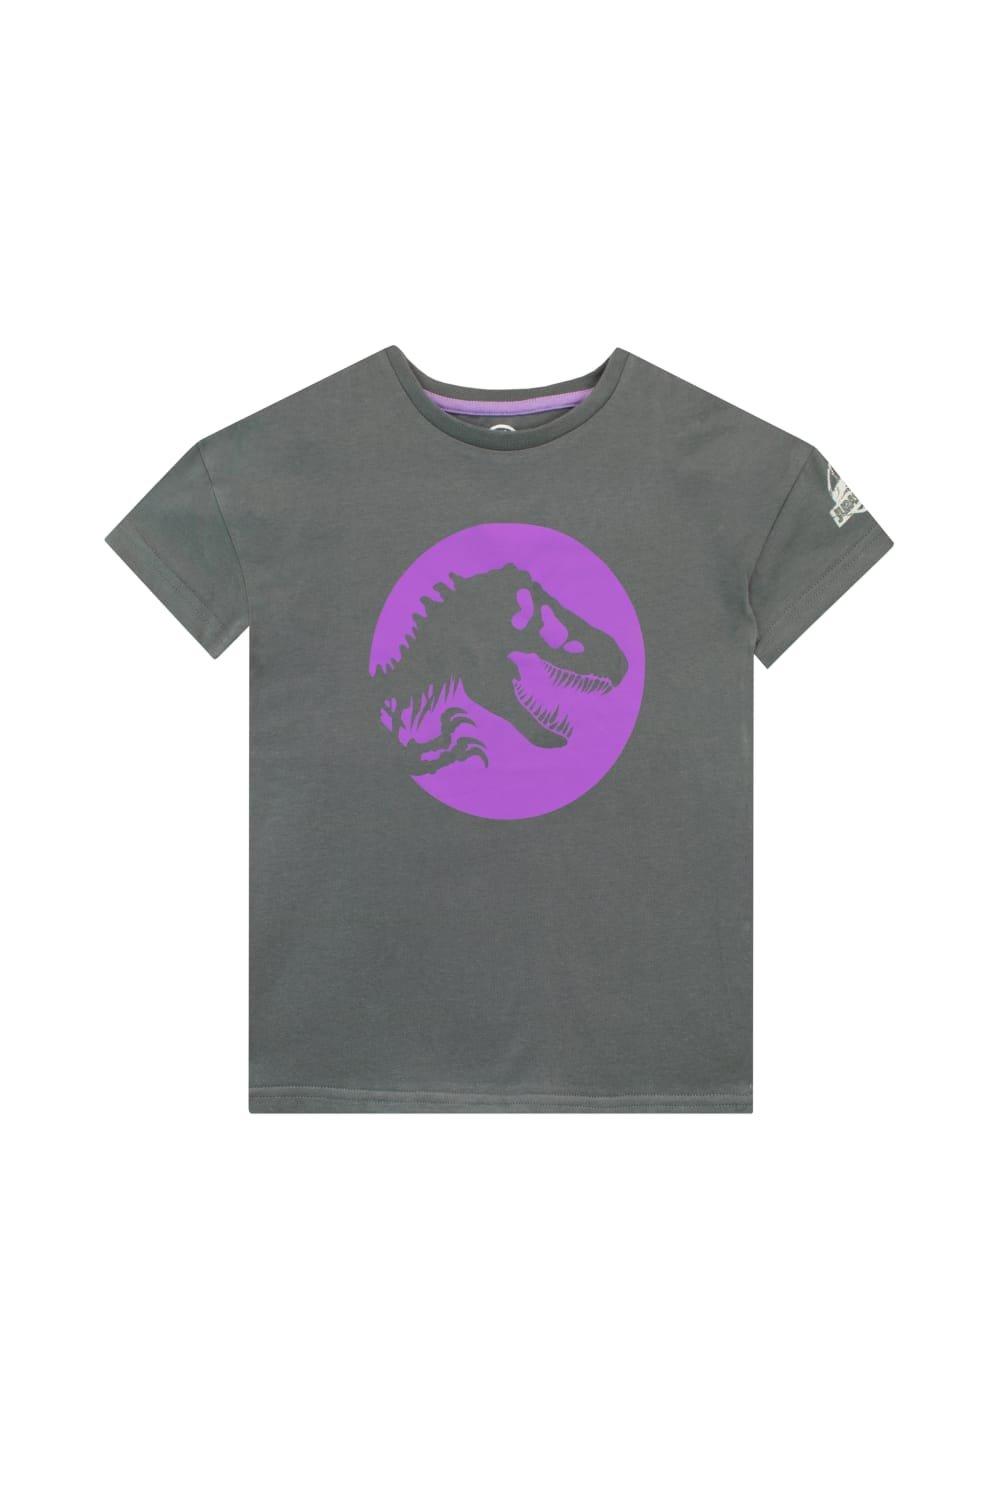 Indominus Rex Dinosaur T-Shirt